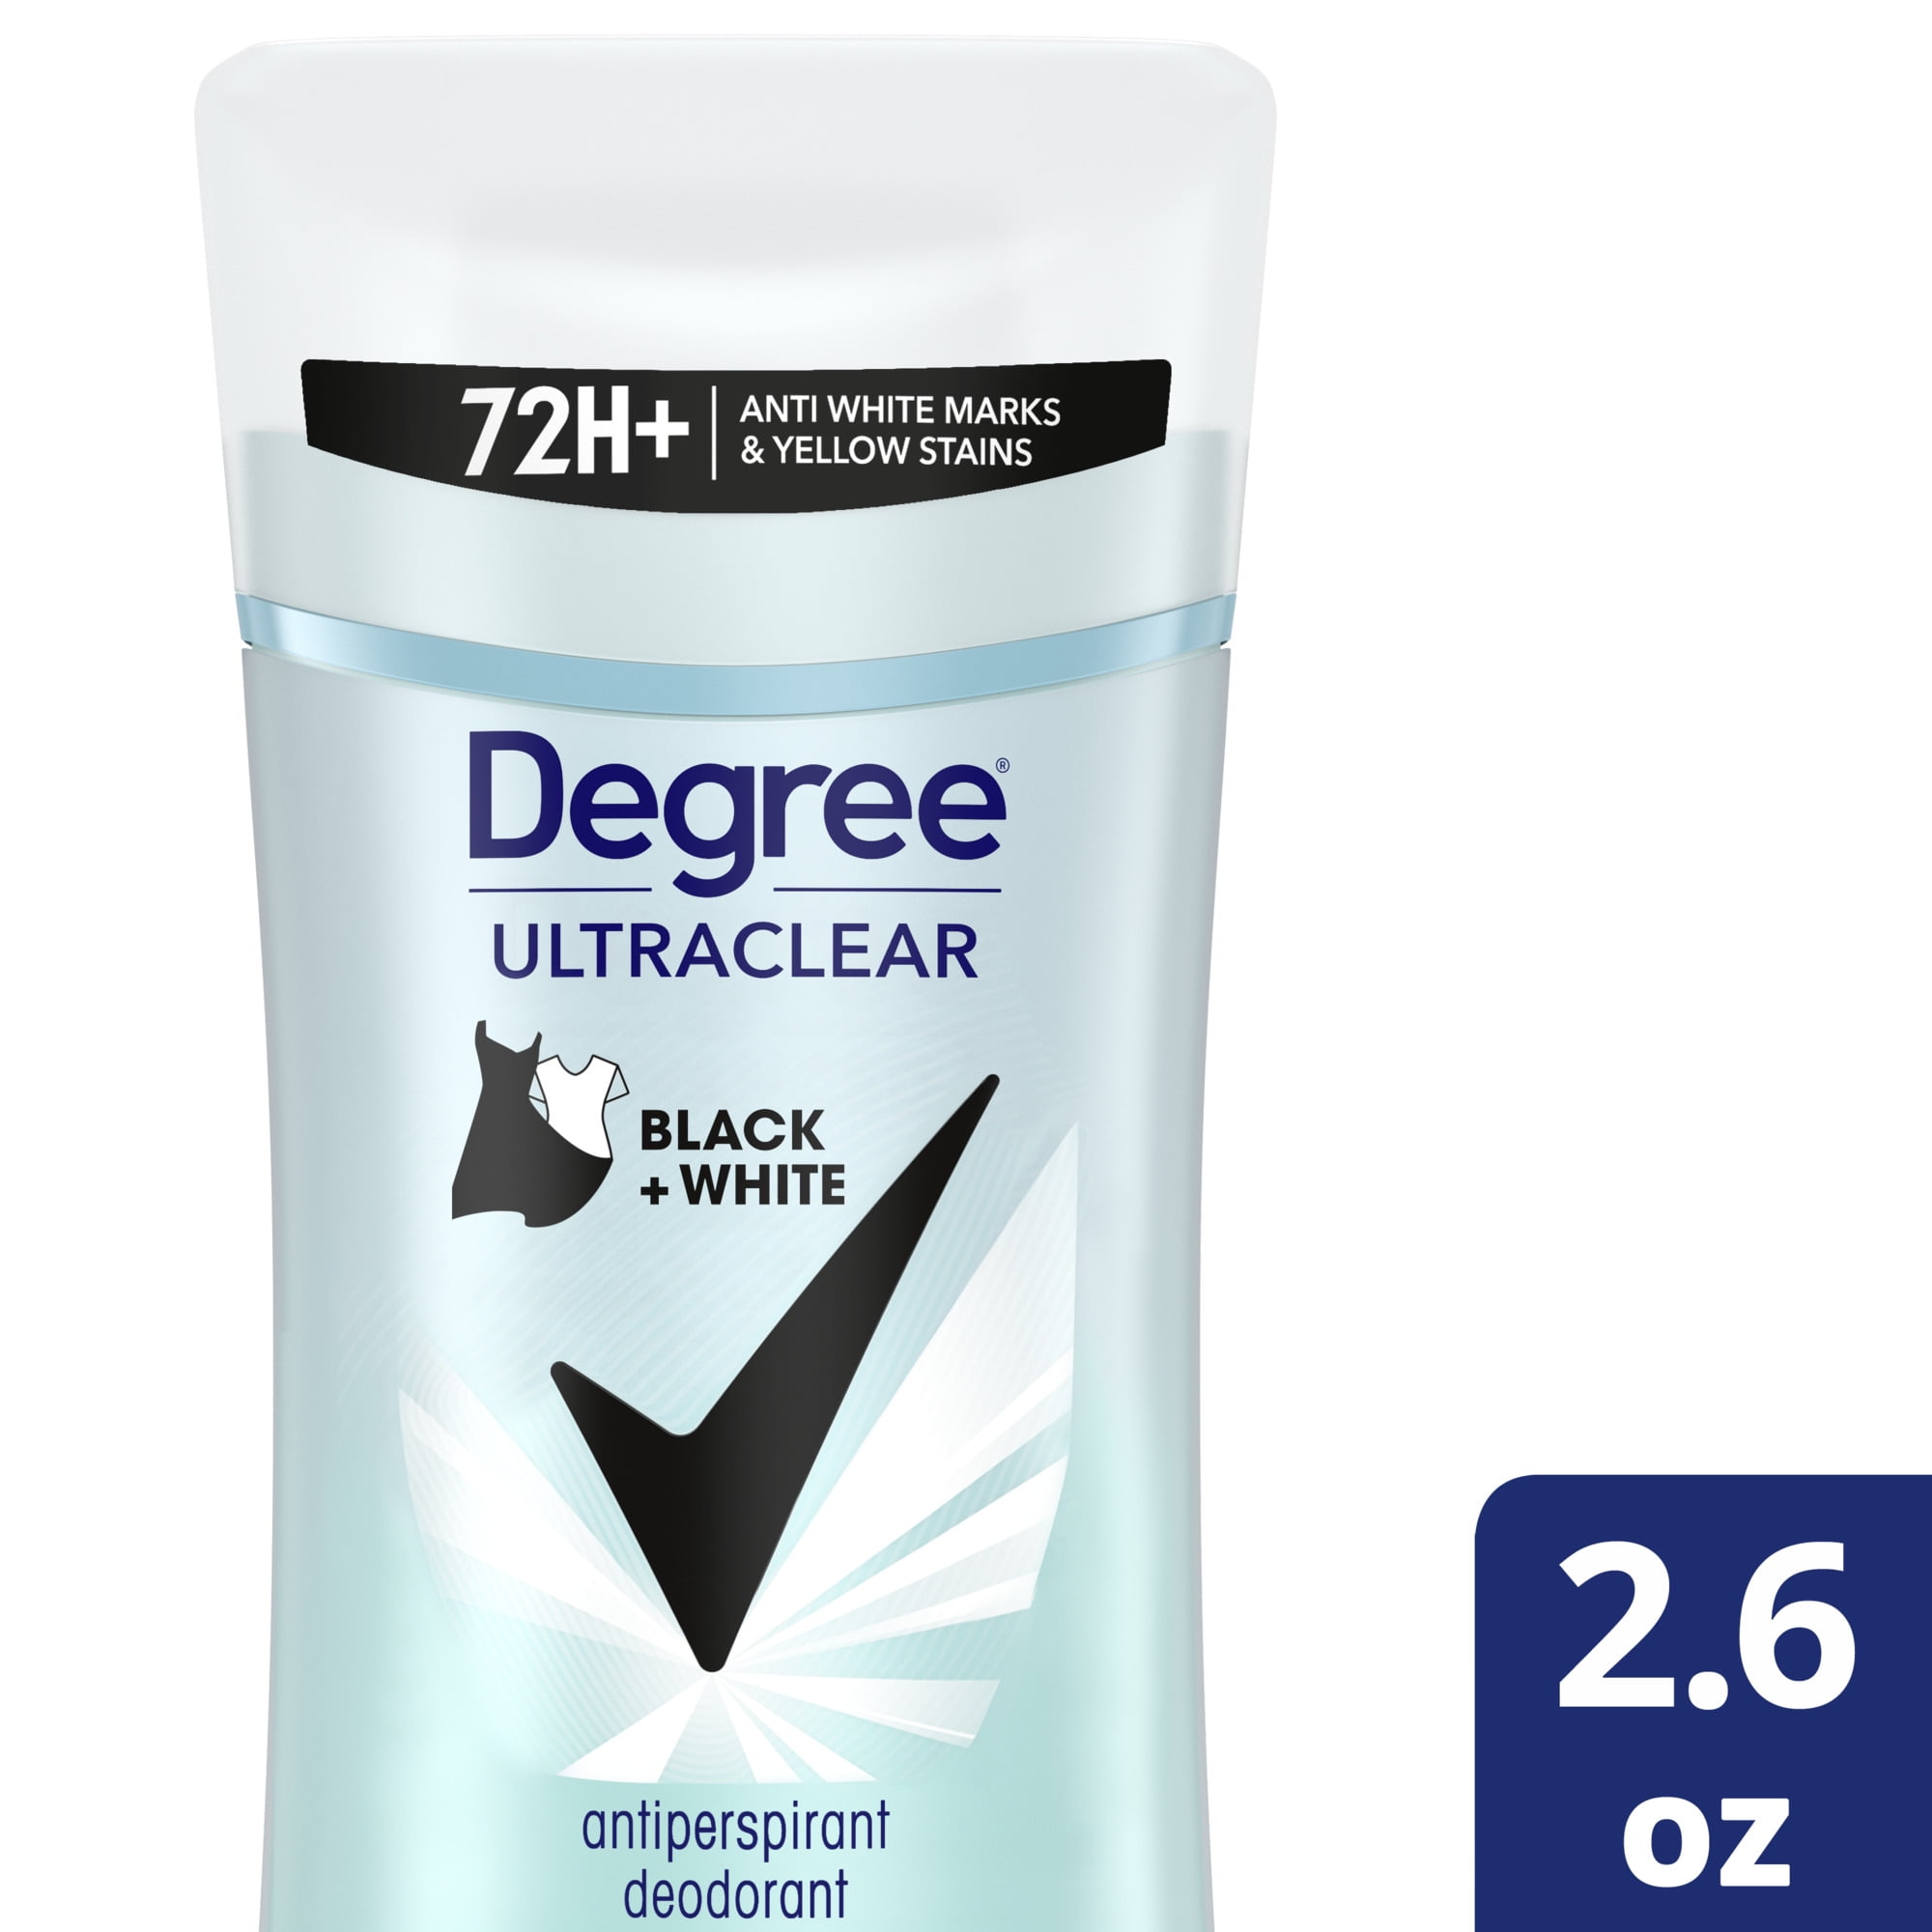 Degree UltraClear Black+White Antiperspirant Deodorant, 2.6 oz